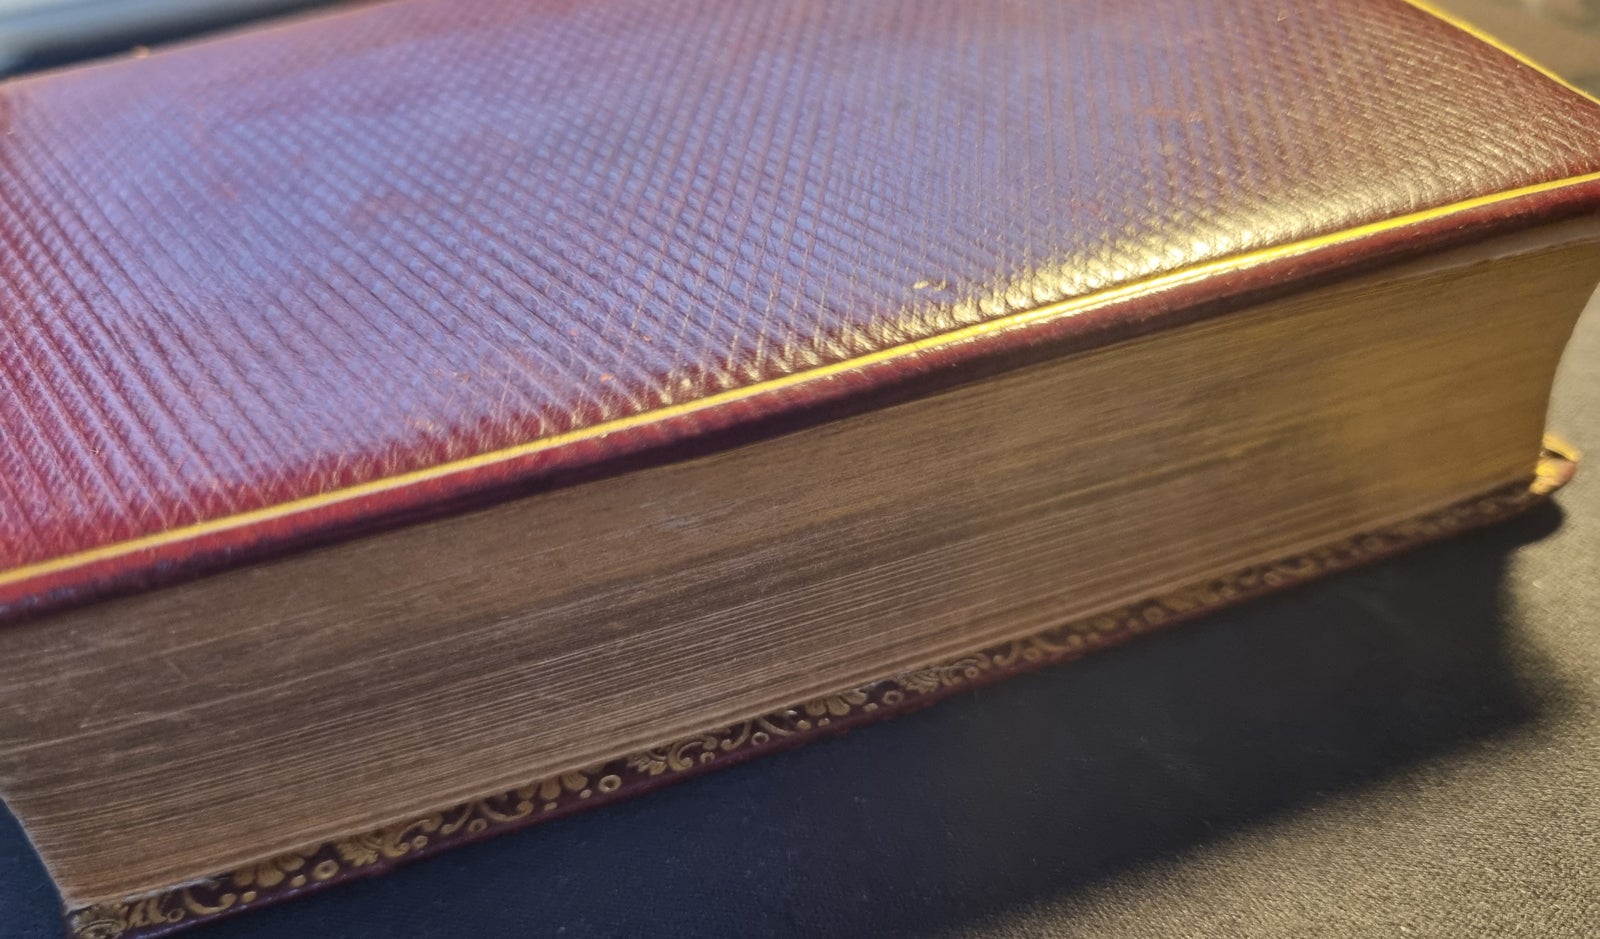 Psalmebog, Læderindbundet med guldornamentering, 105 år